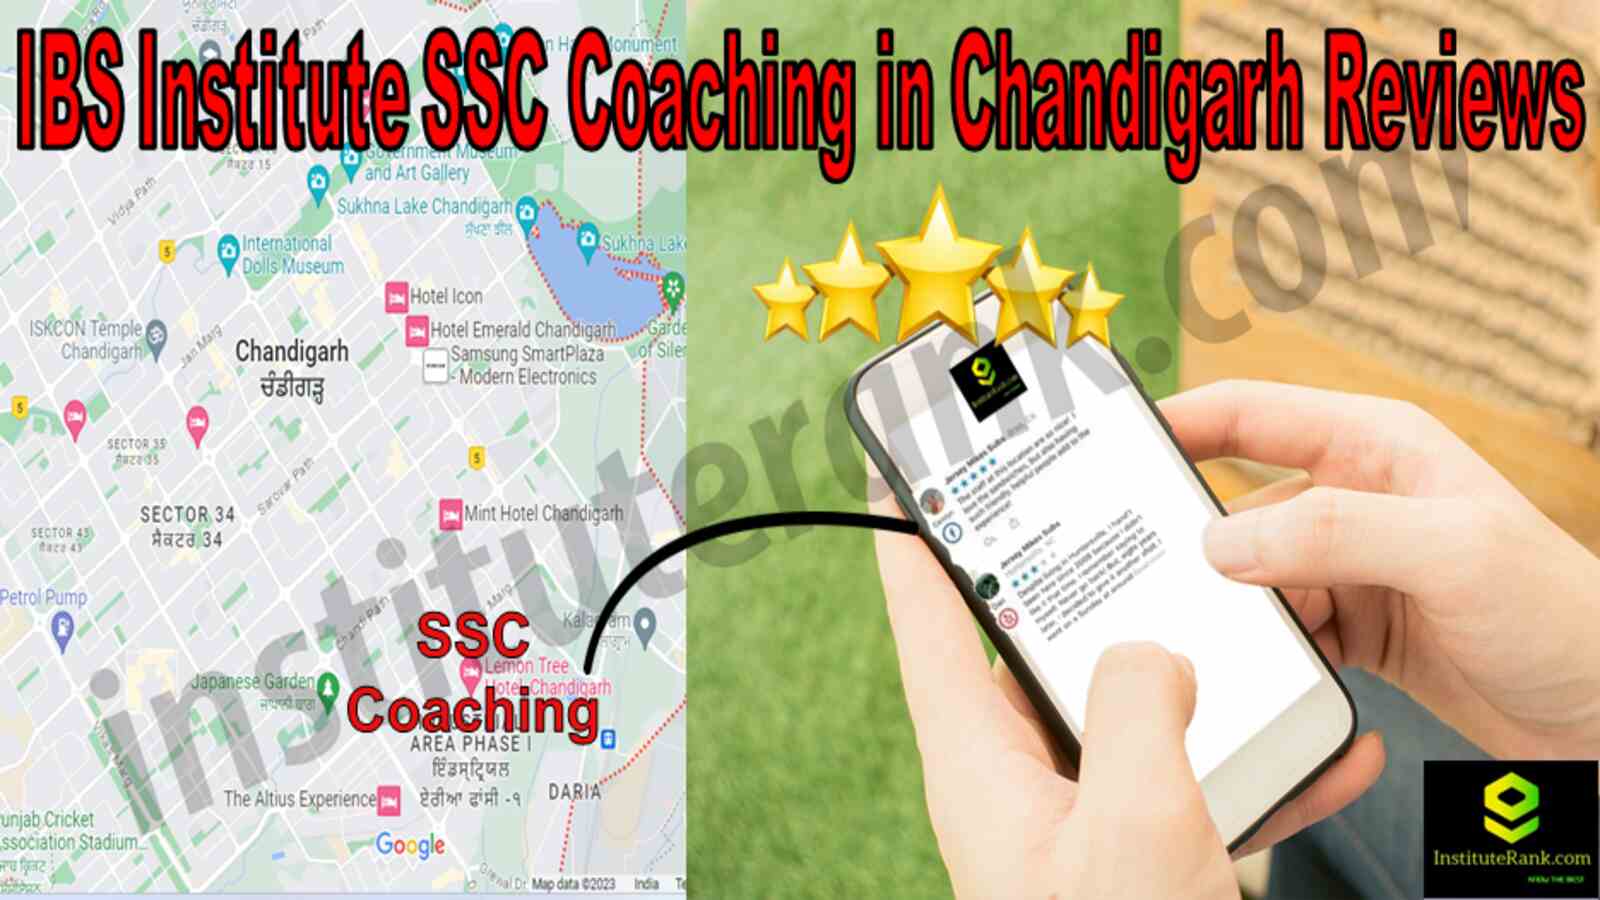  SSC Coaching in Chandigarh Reviews